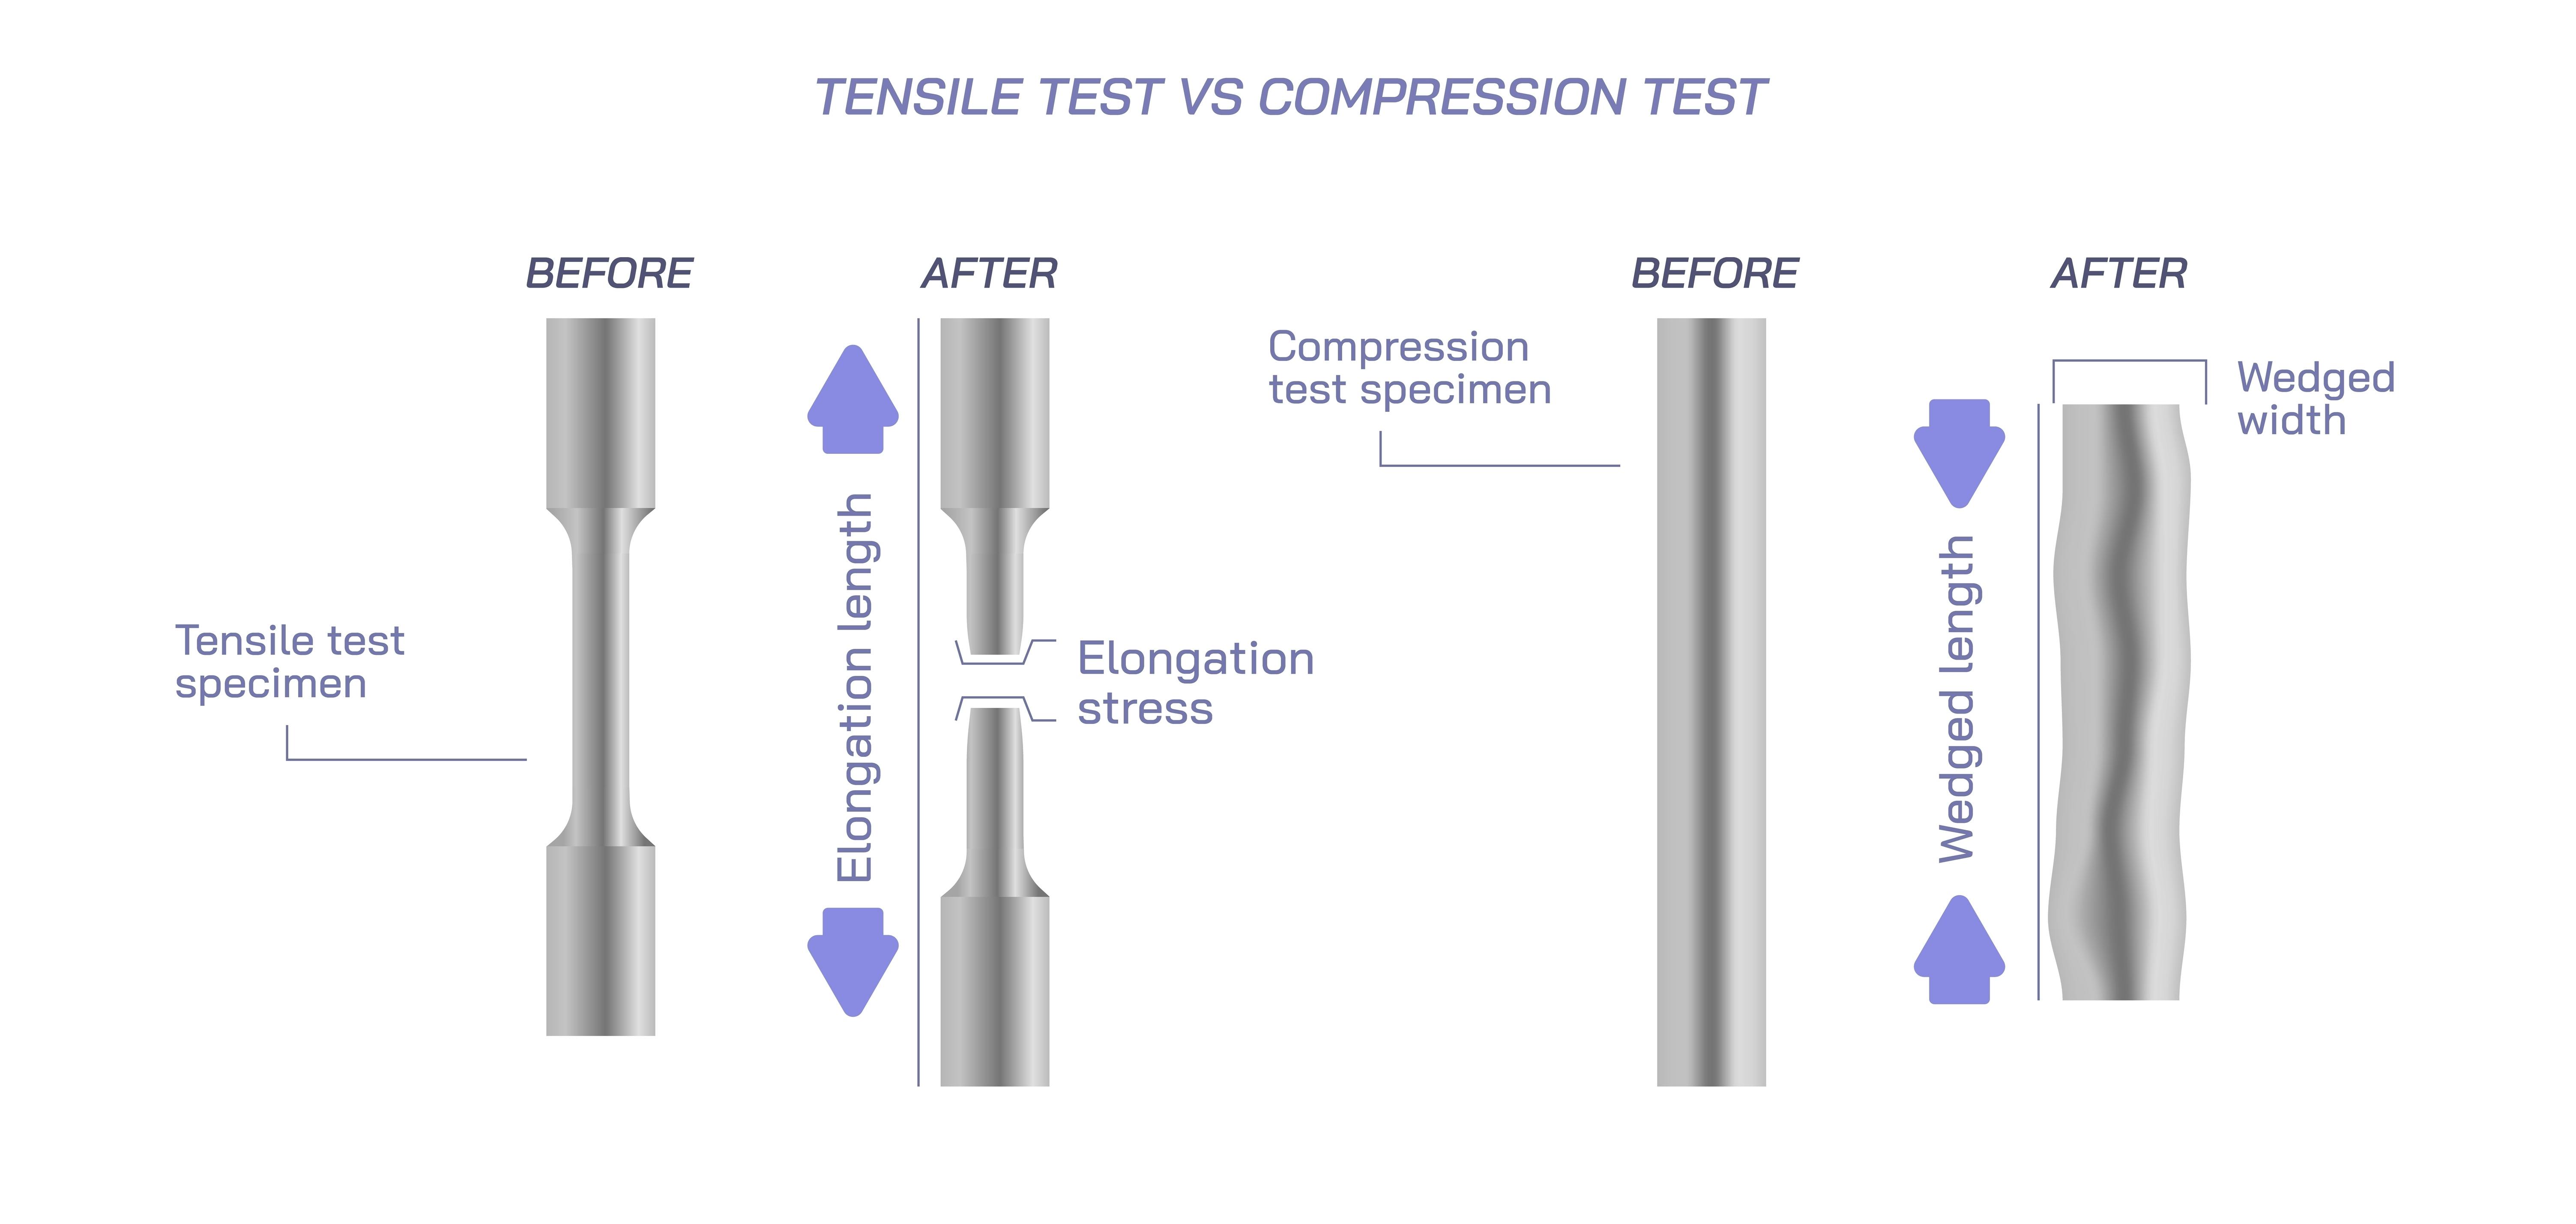 https://images.prismic.io/xometry-marketing/5e3b8edd-e41c-44ea-a7d9-c0cc0d39b156_tensile-test-vs-compression-test.jpg?auto=compress%2Cformat&fit=max&w=6013&h=2856